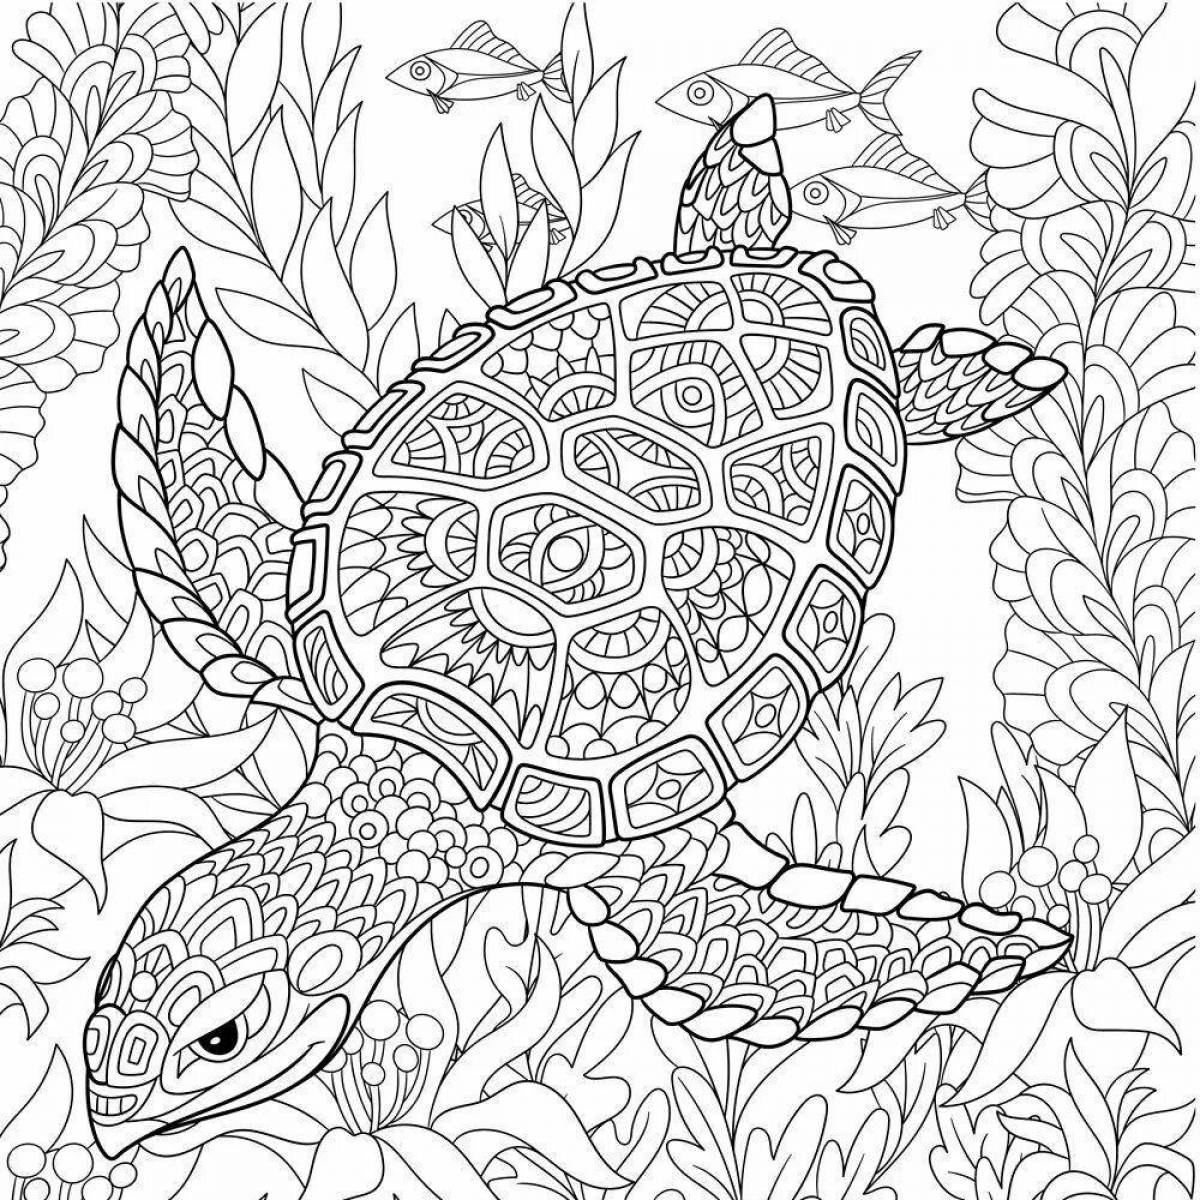 Bright anti-stress turtle coloring book